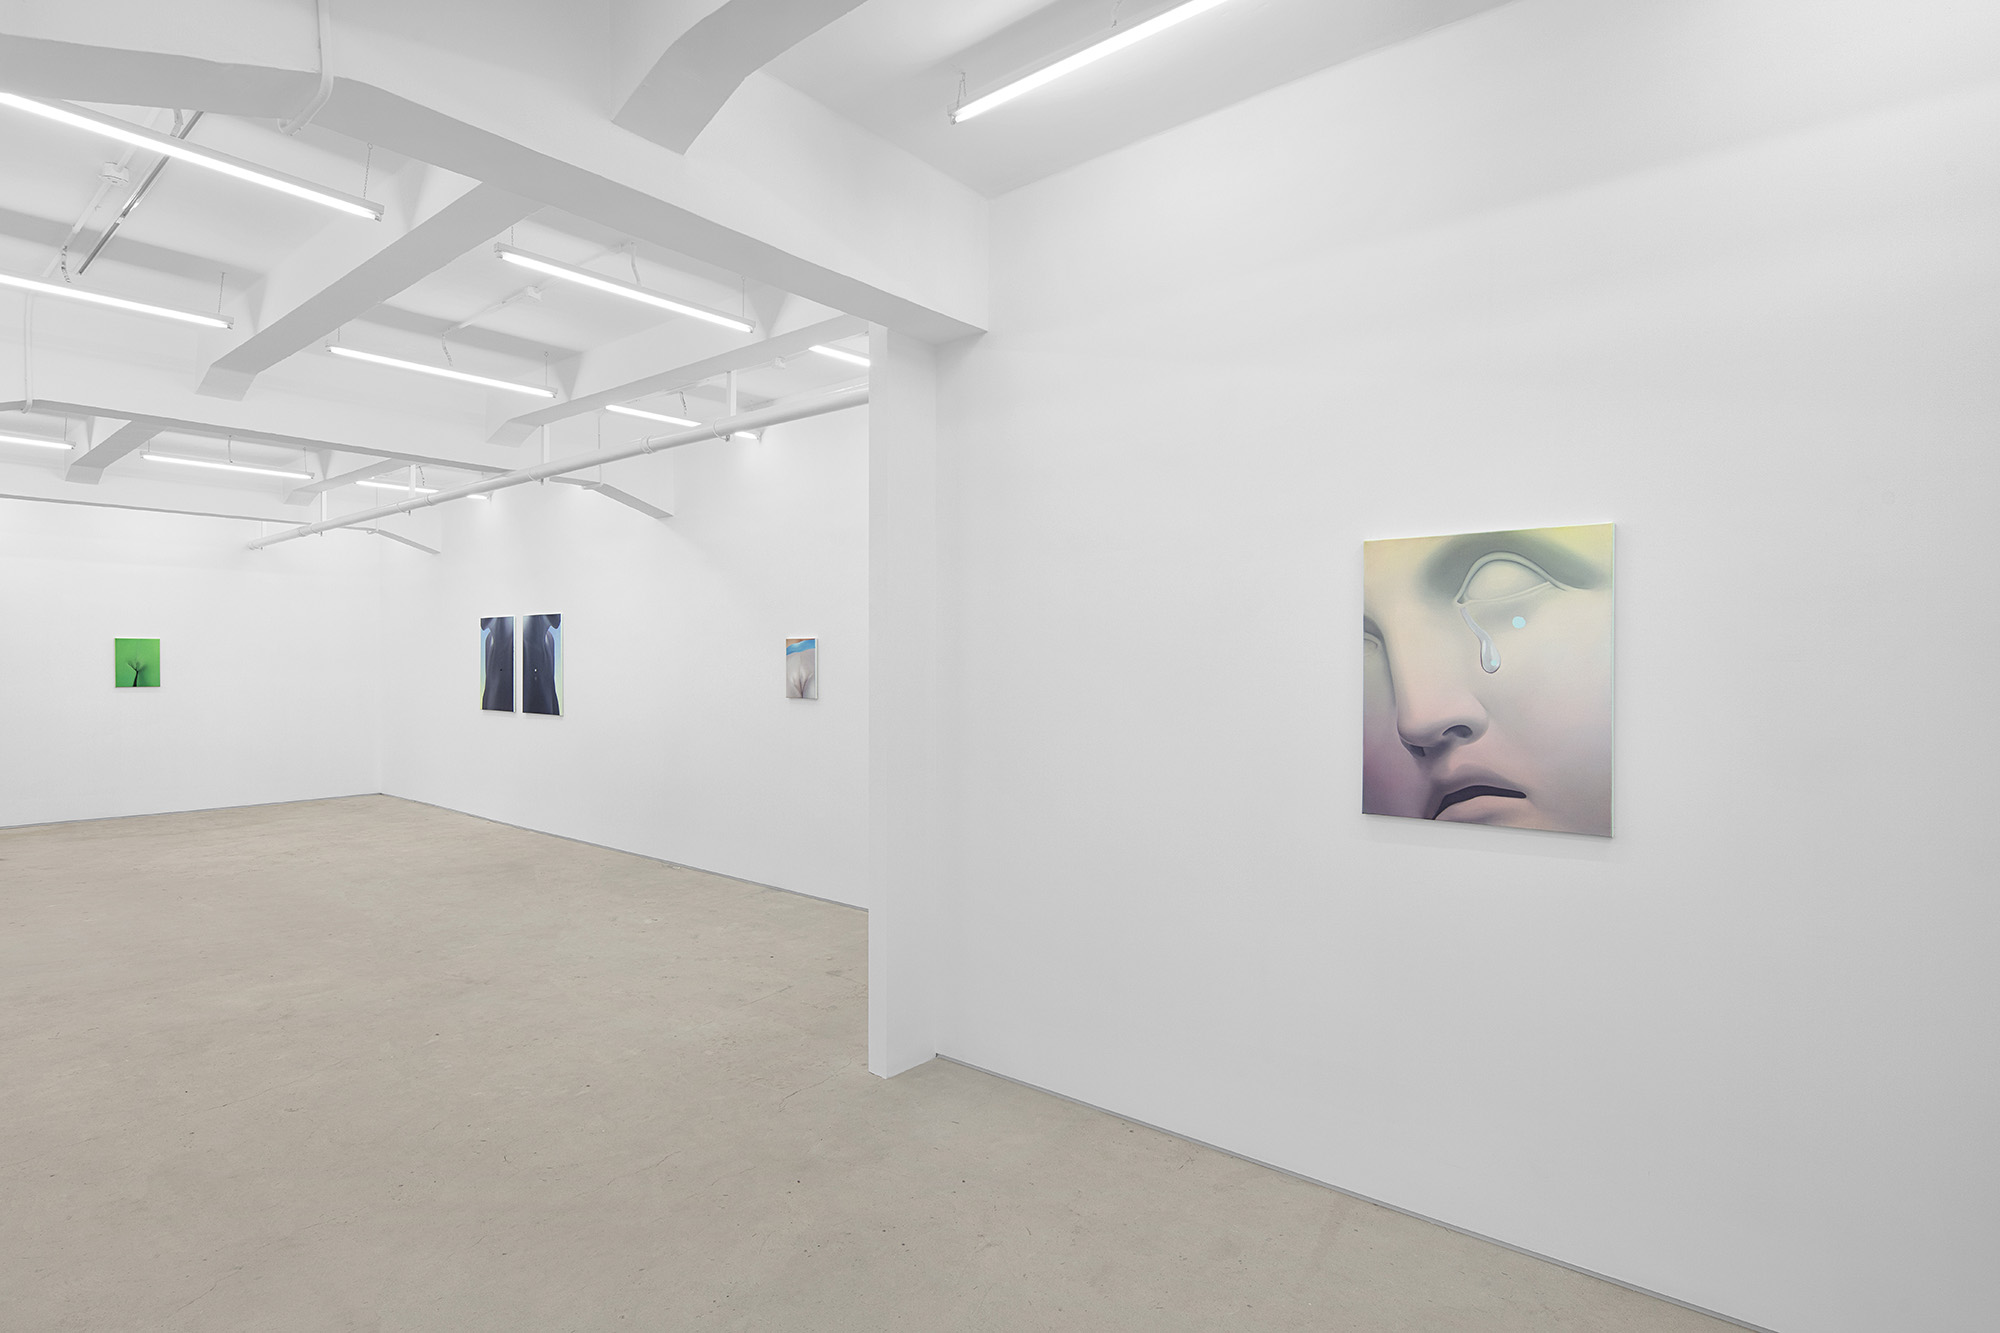 Vivian Greven, The Negatives, solo exhibition at Gallery Vacancy, installation view 22